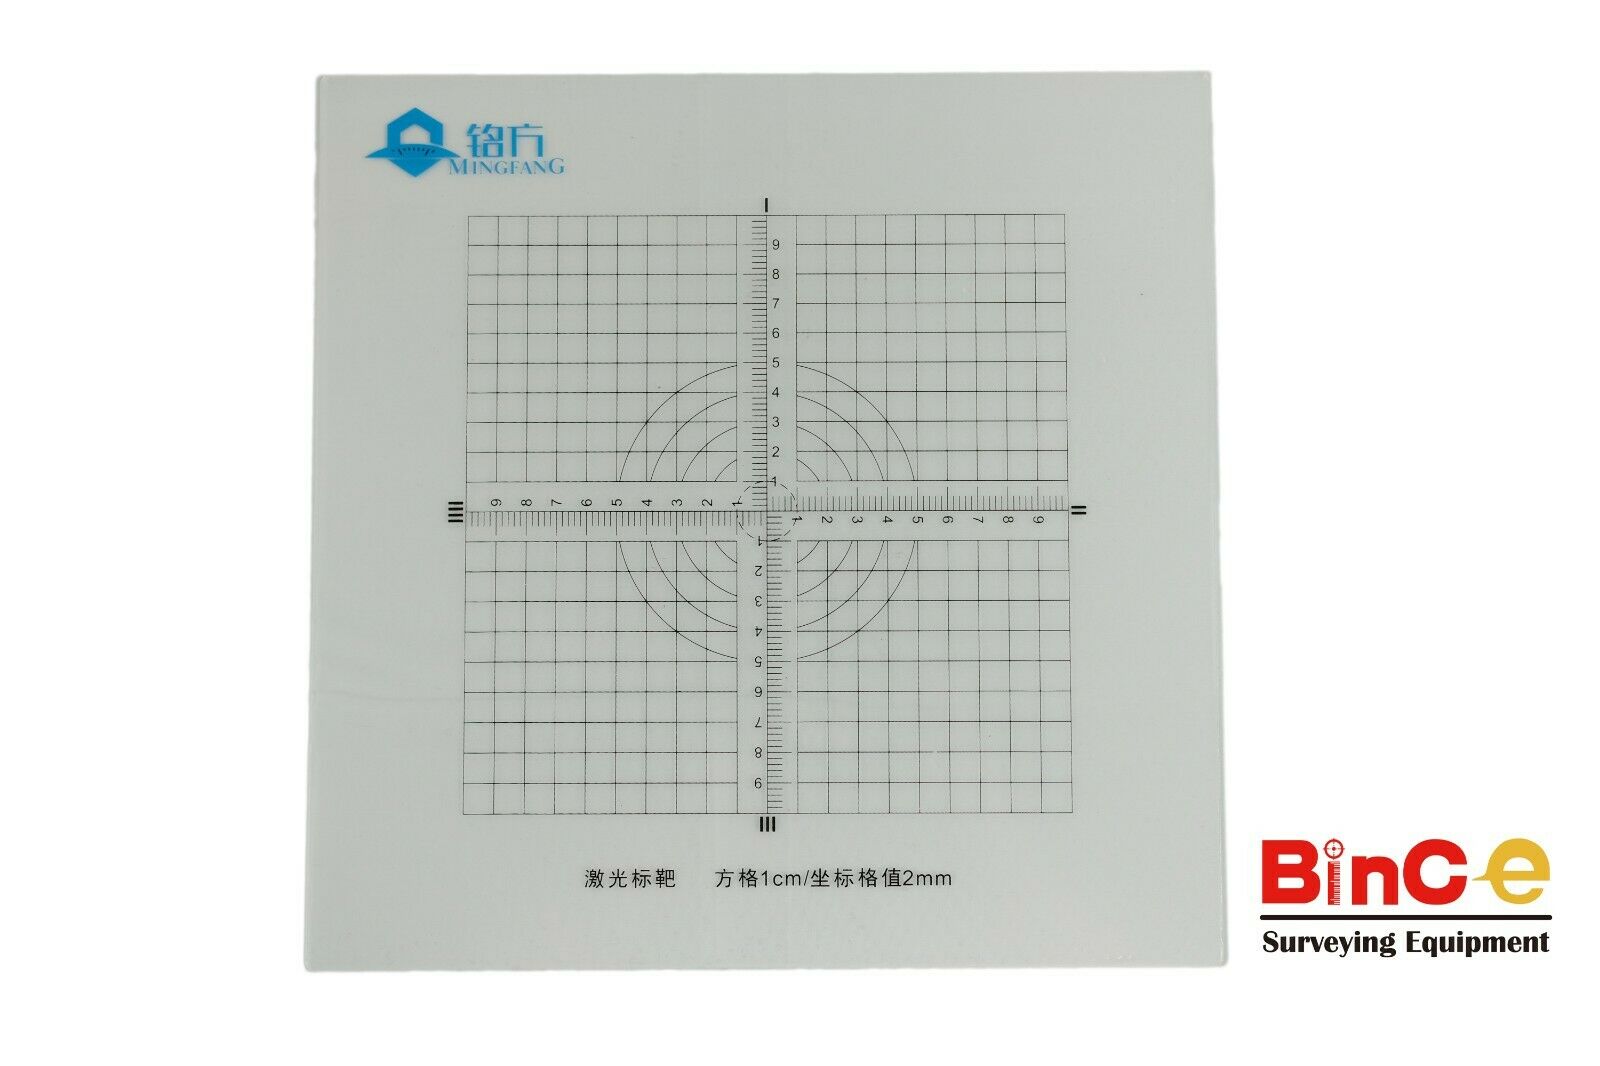 Bince LP100 Green Beam Laser Plummet Precision Alignment Plumb Laser Zenith